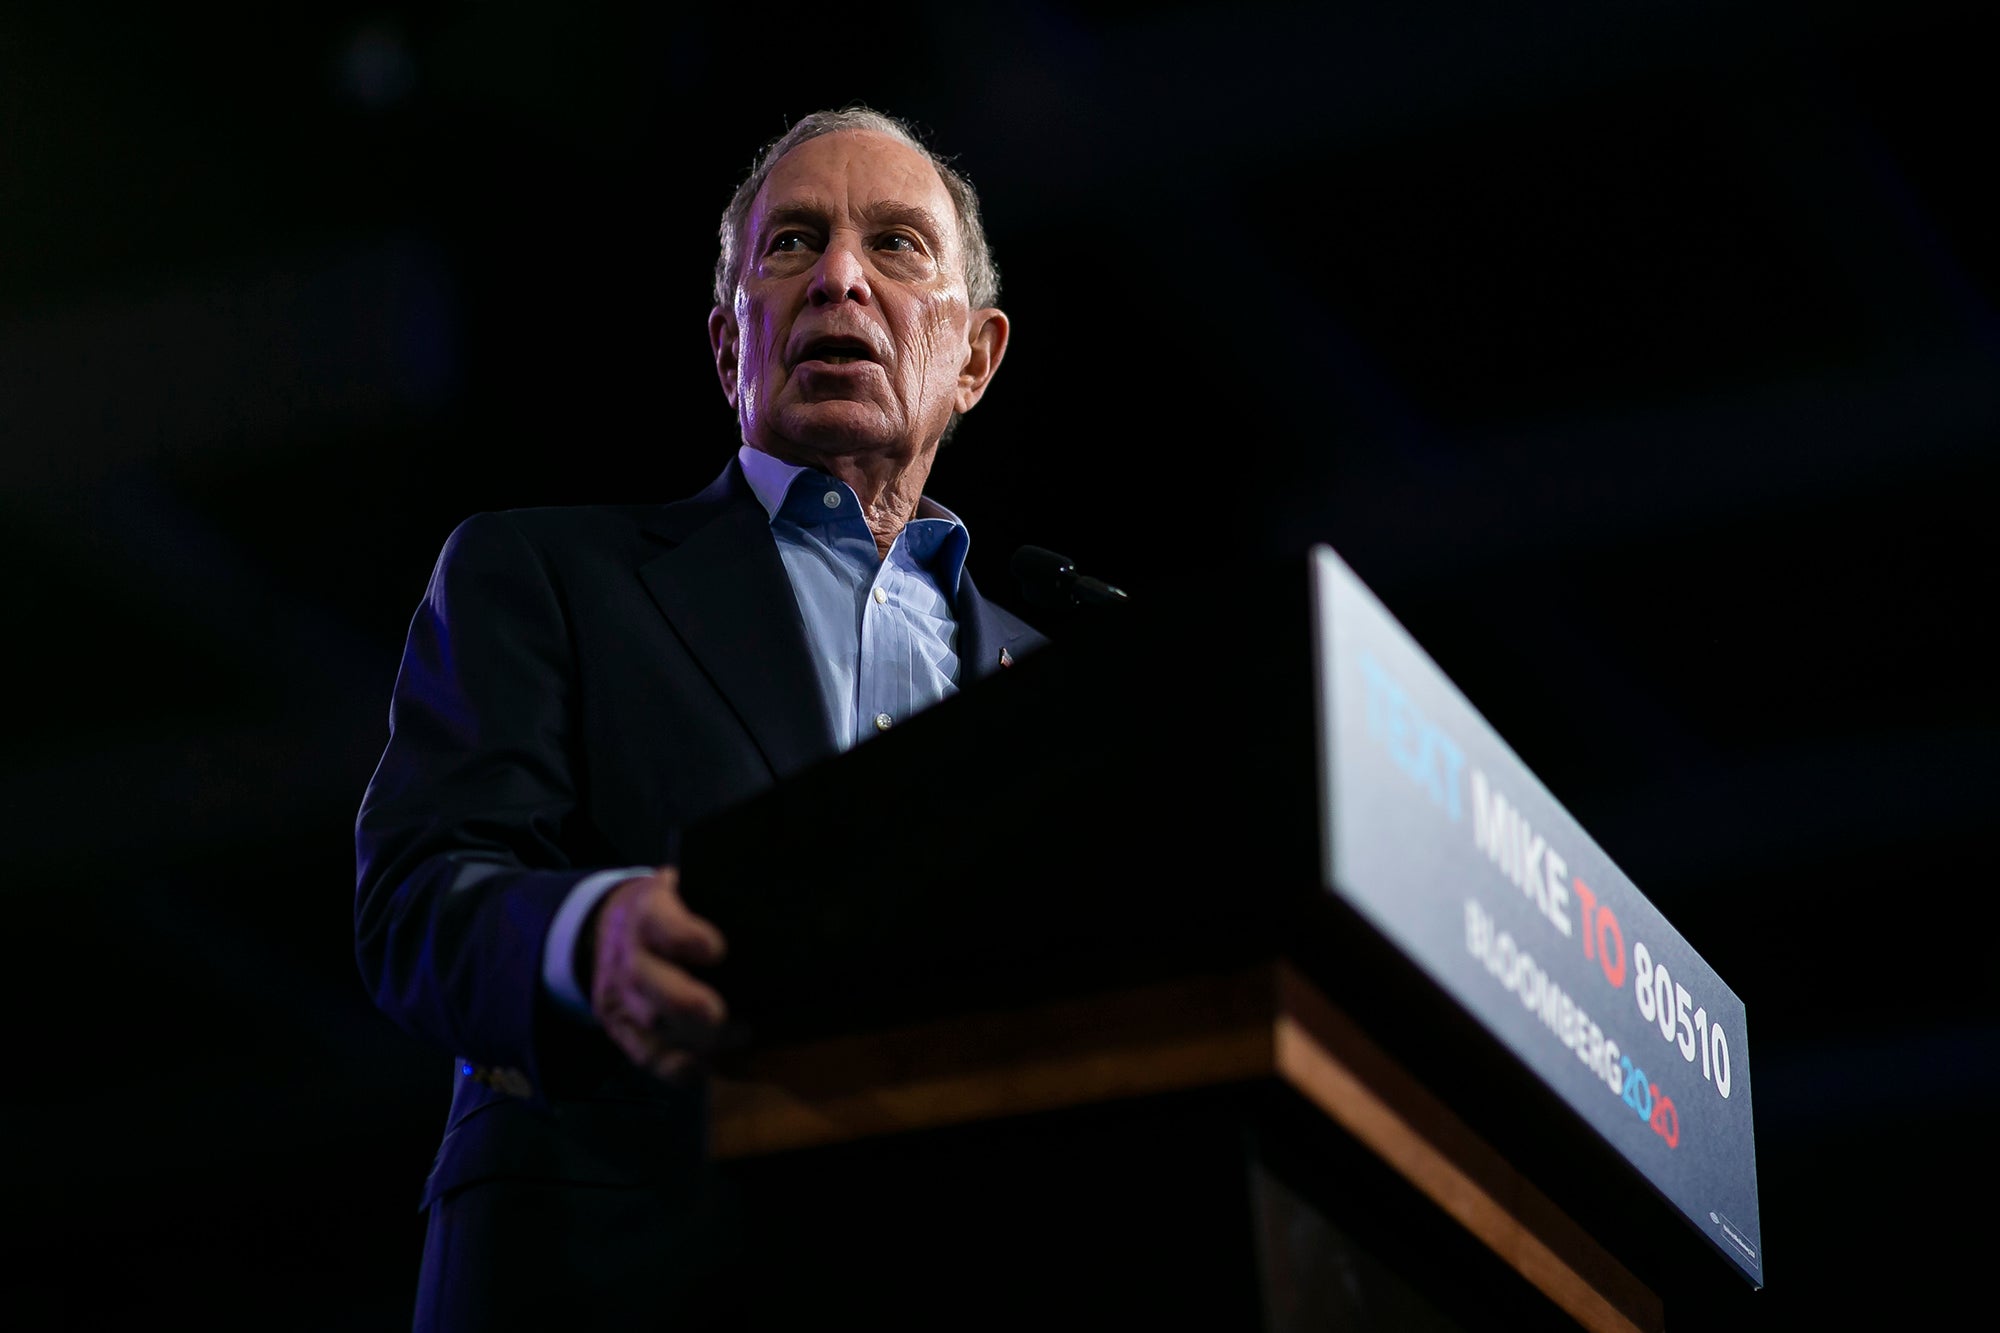 Bloomberg Ends Presidential Campaign, Endorses Biden